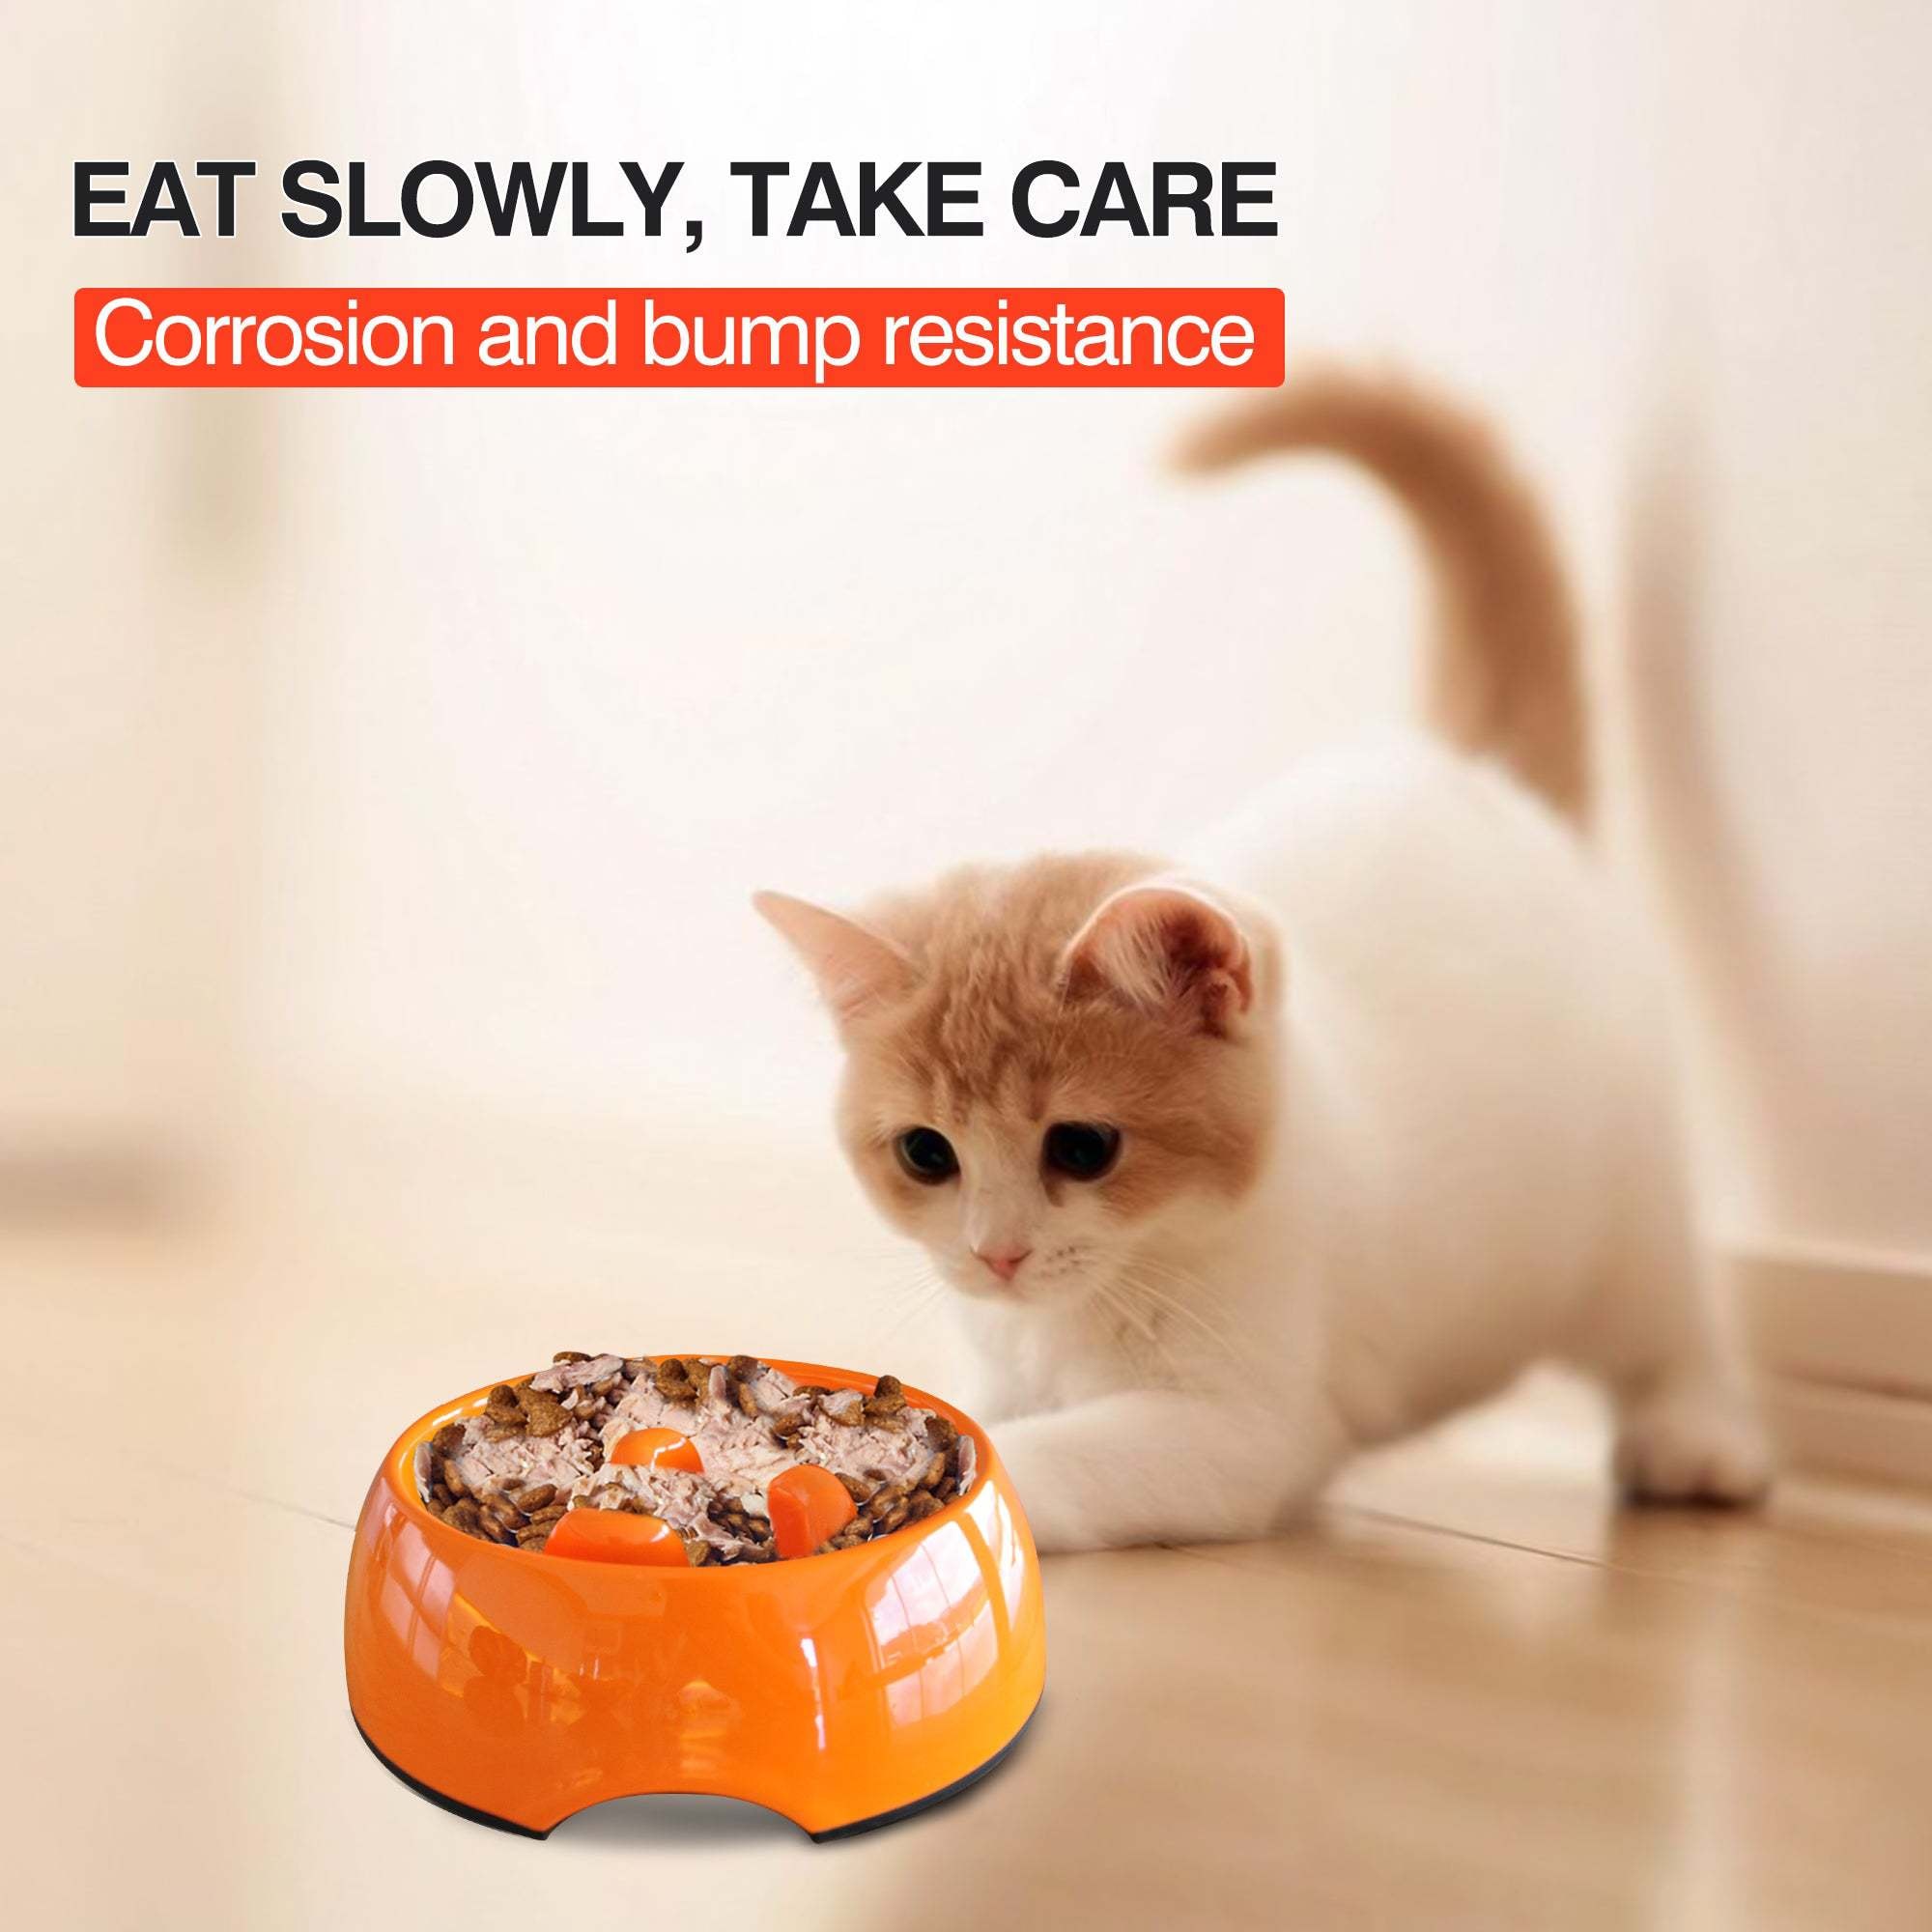 AKIAKDOG Anti-Gulping 狗碗慢速喂食器适用于快食者的交互式膨胀停止宠物碗橙色